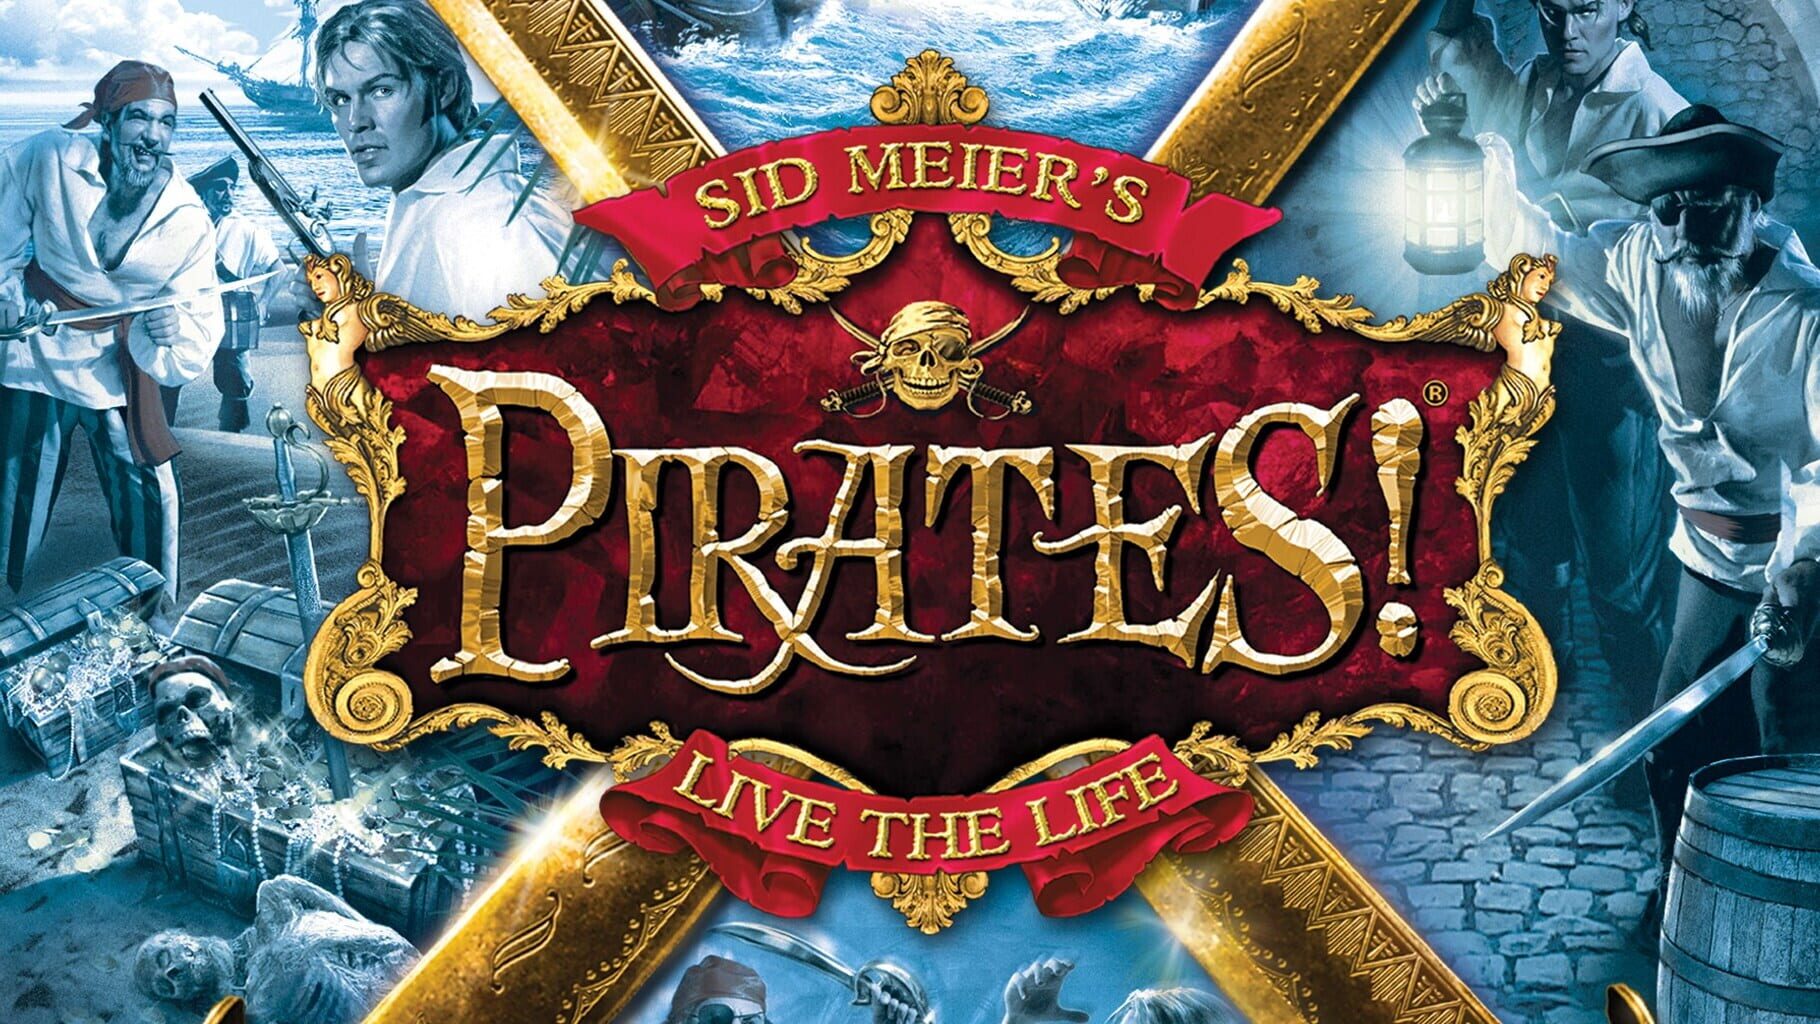 Arte - Sid Meier's Pirates!